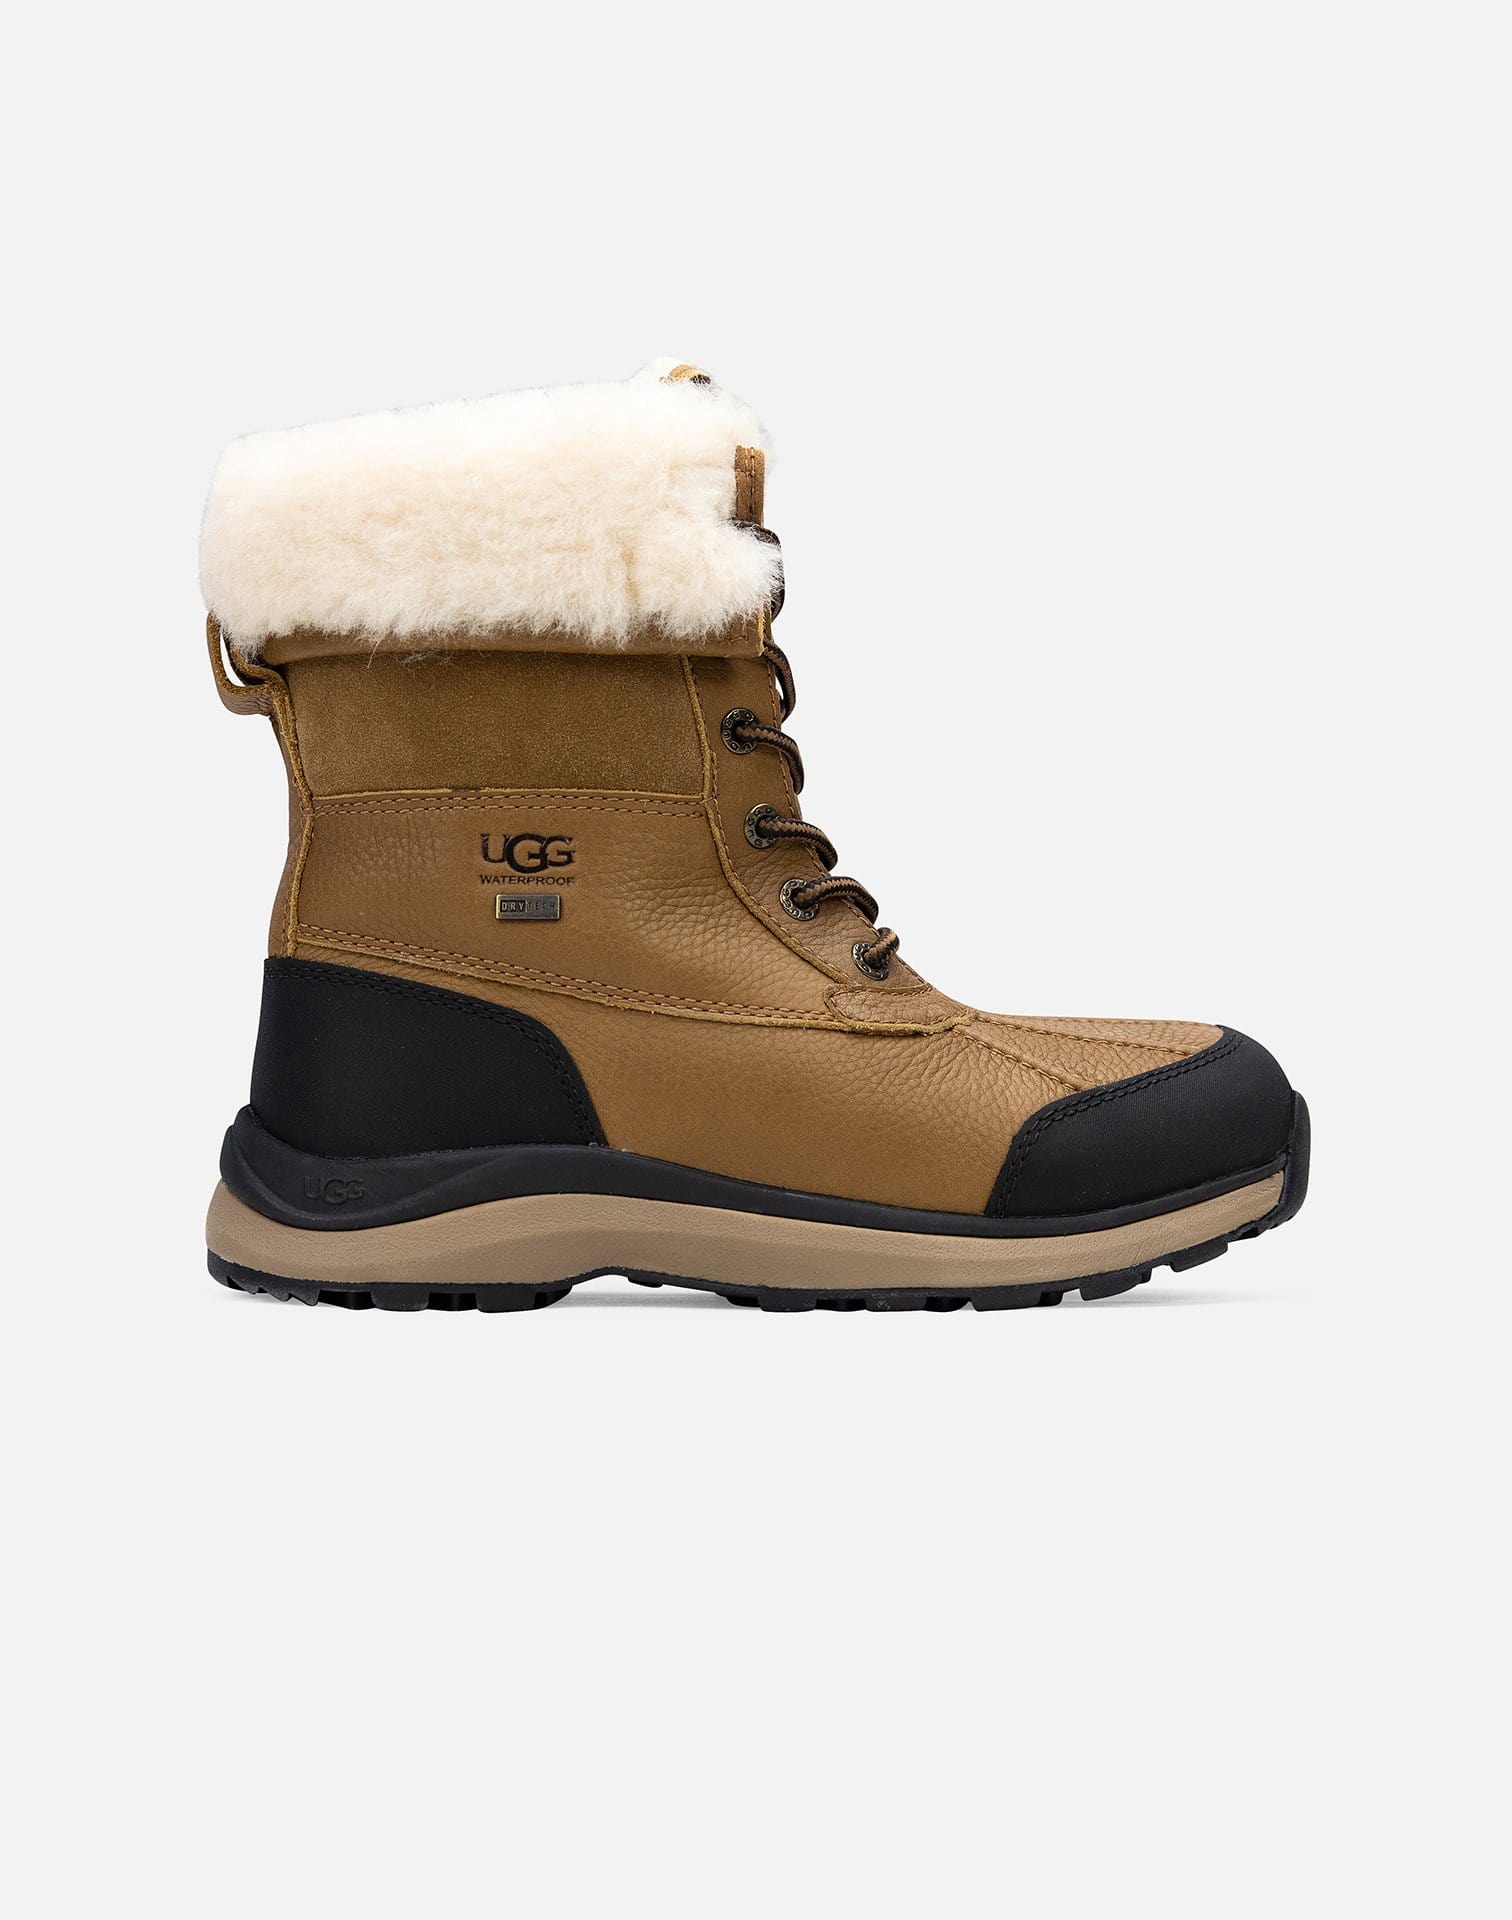 UGG Adirondack Boots – DTLR